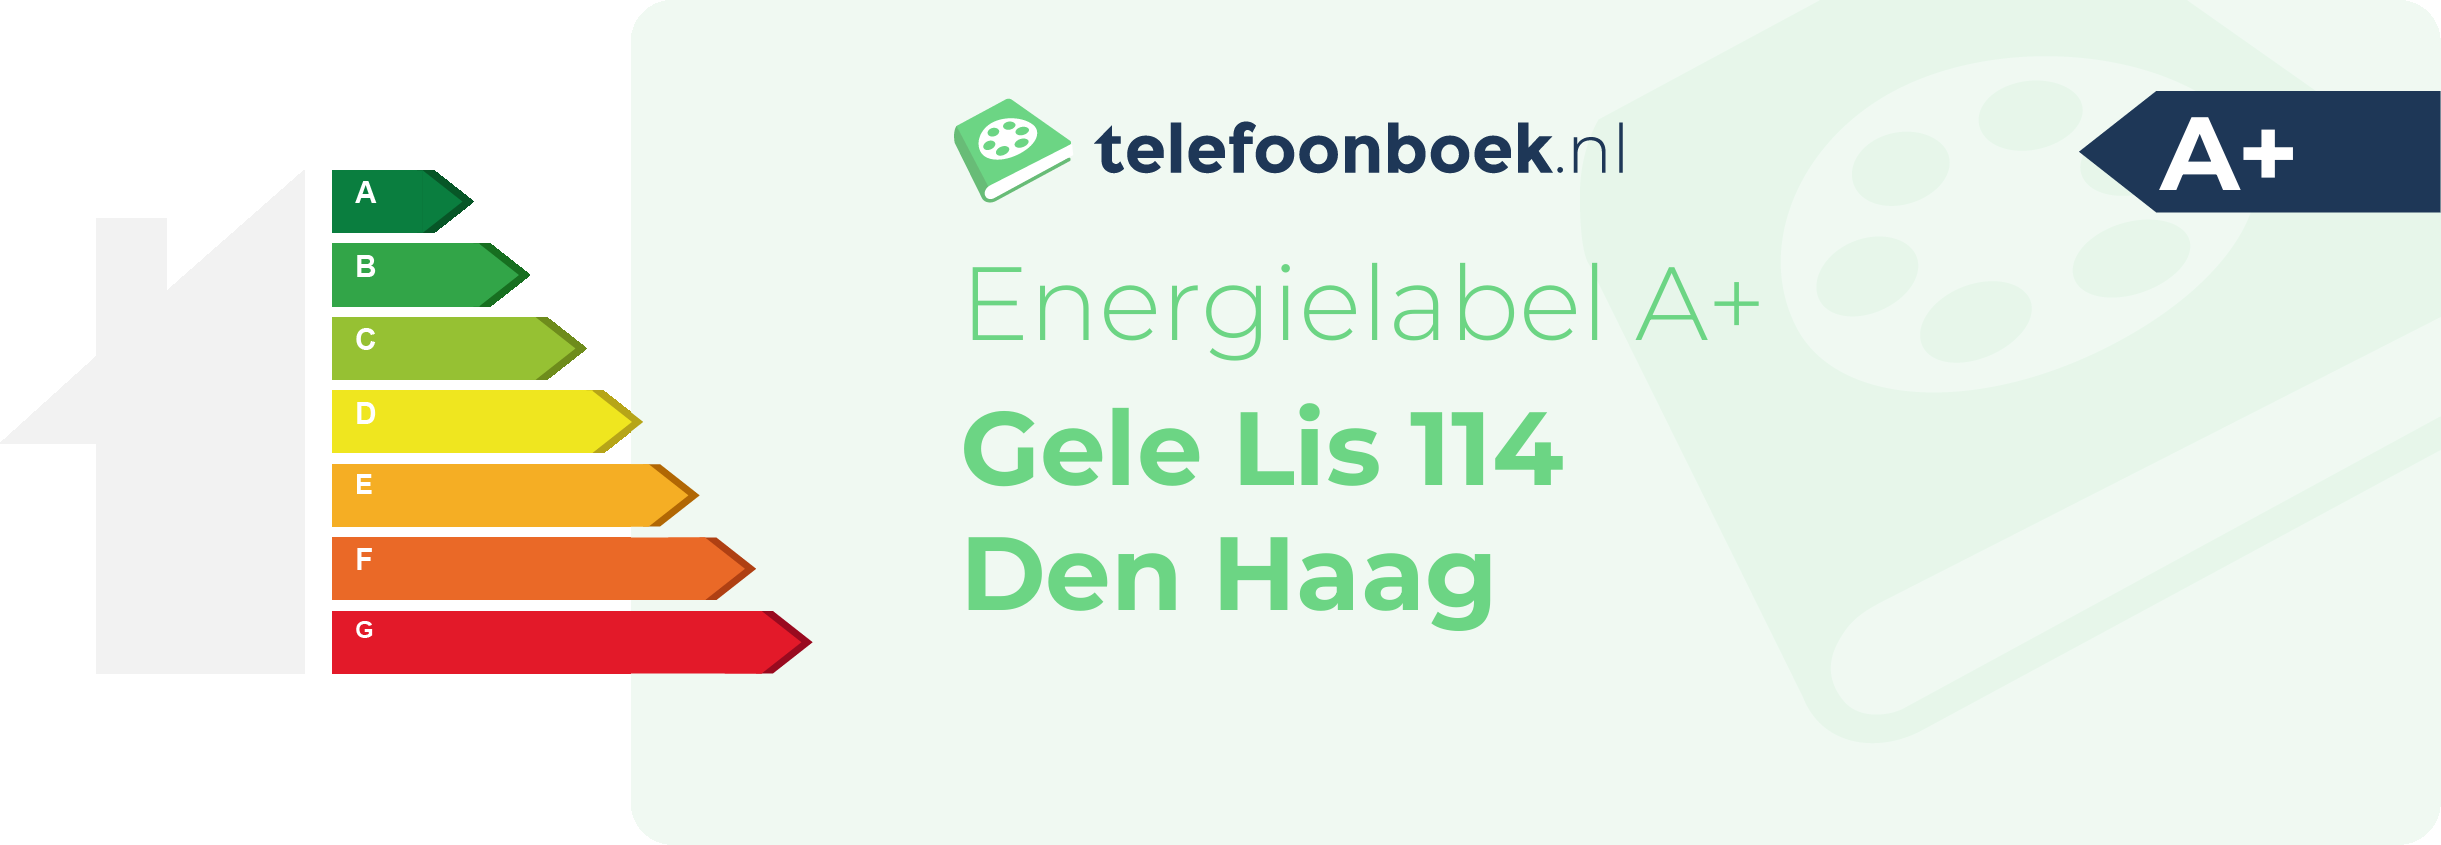 Energielabel Gele Lis 114 Den Haag